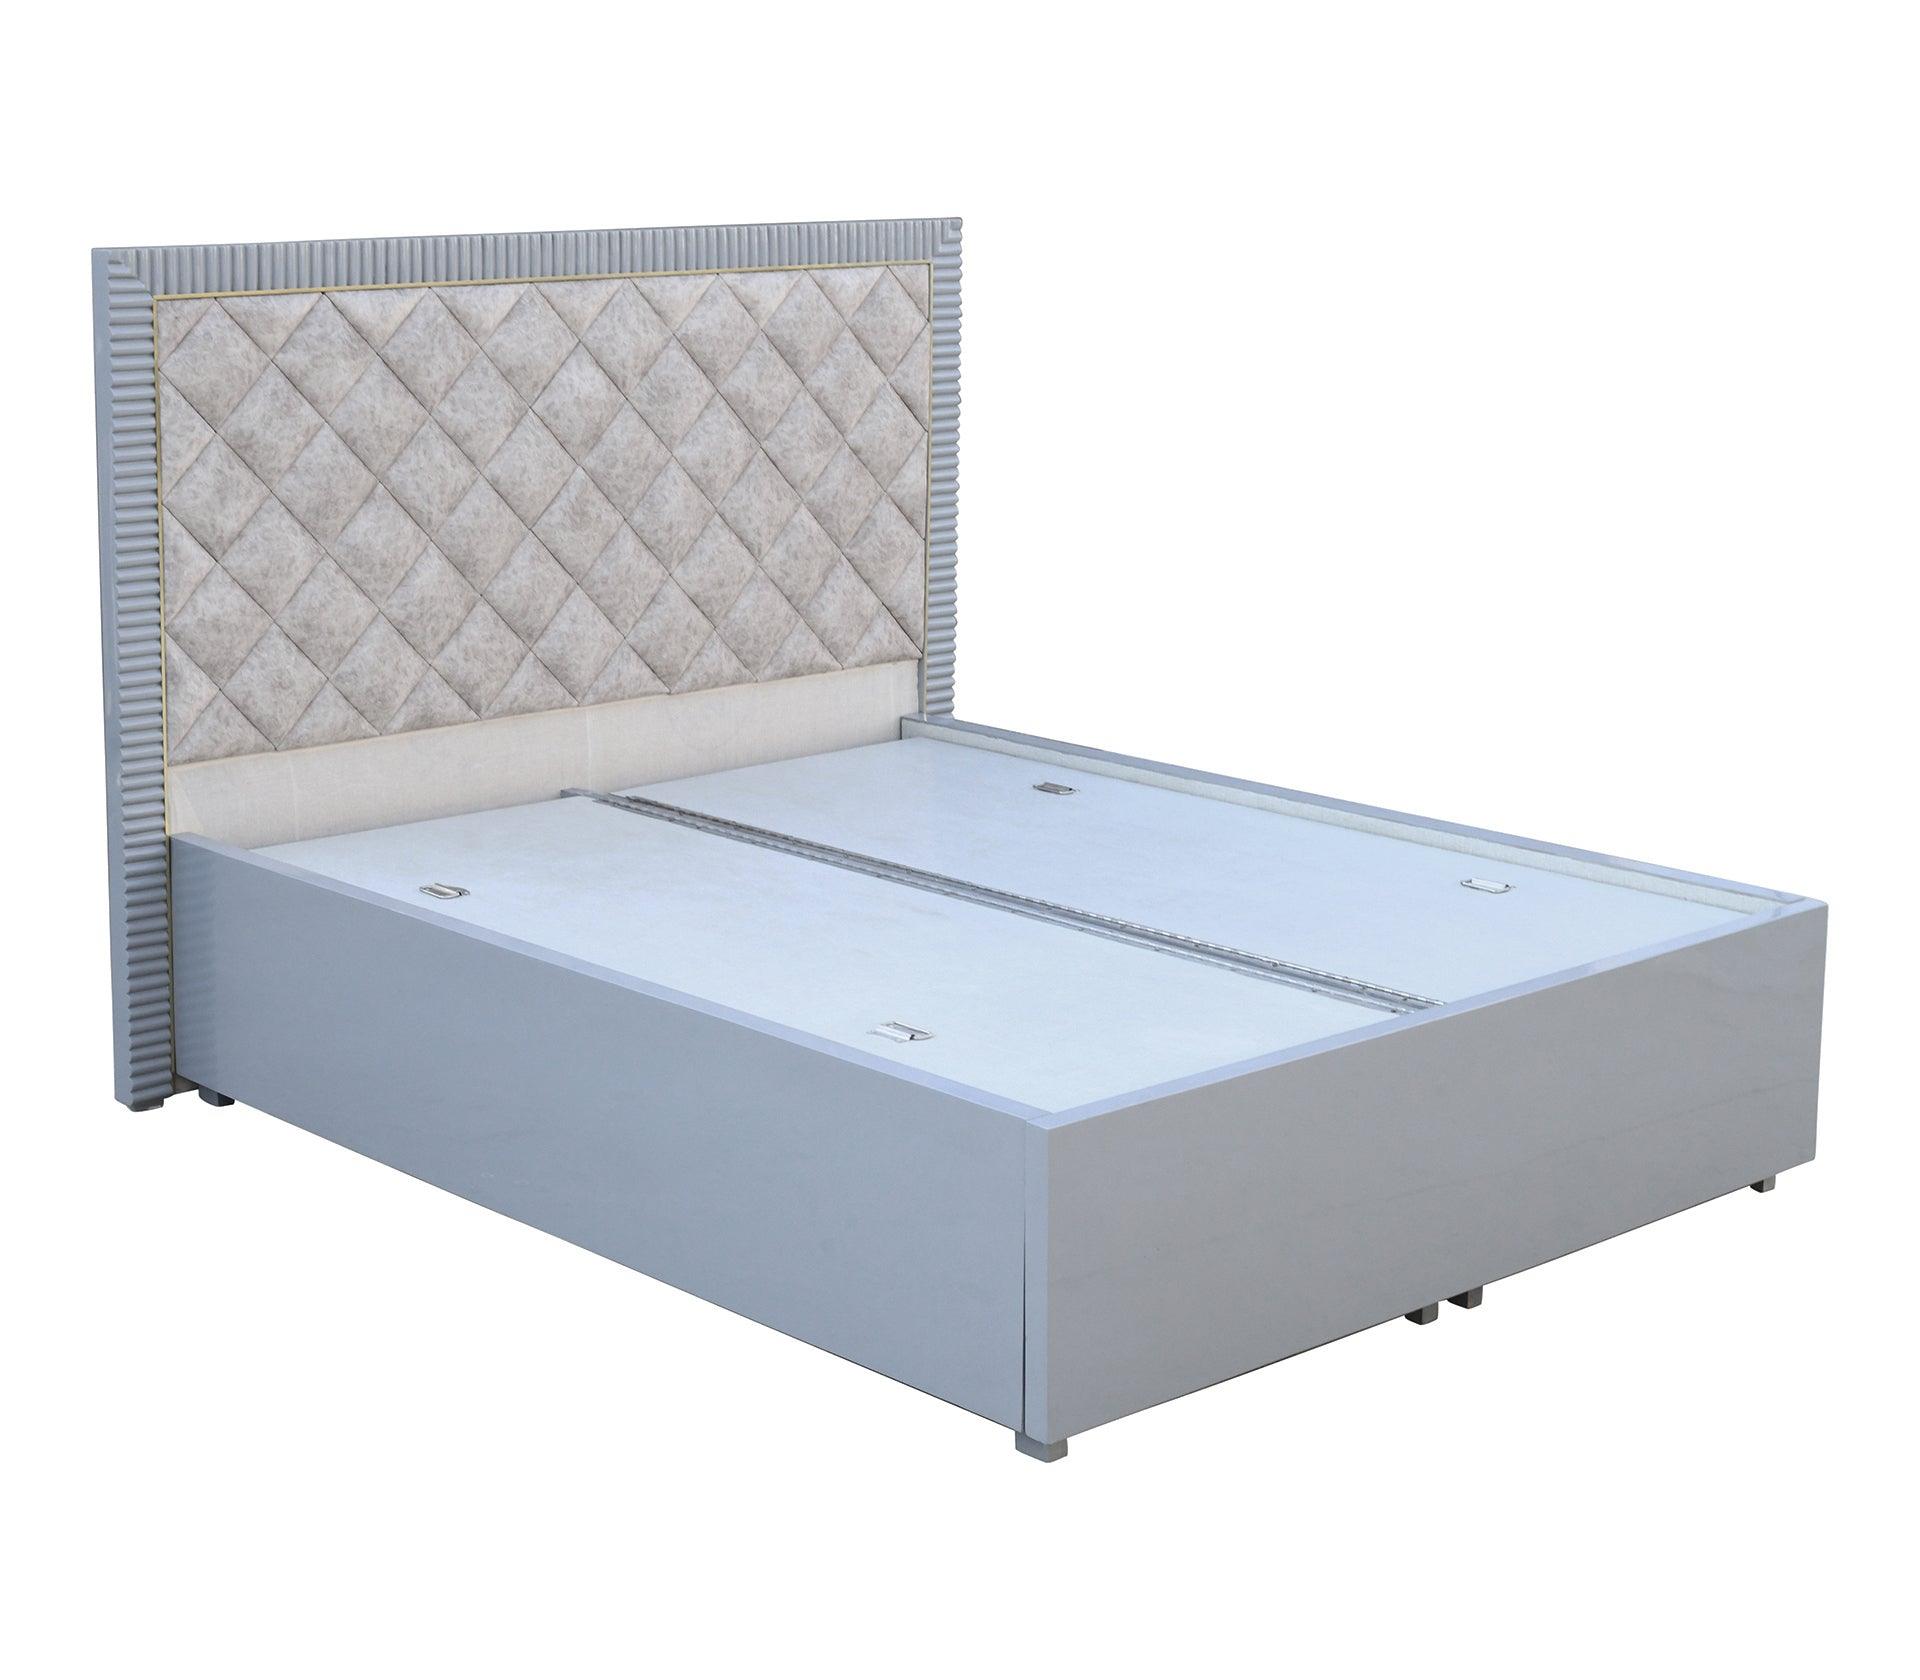 Amelia Beige/Grey Queen Bed With Storage - Furniture Castle